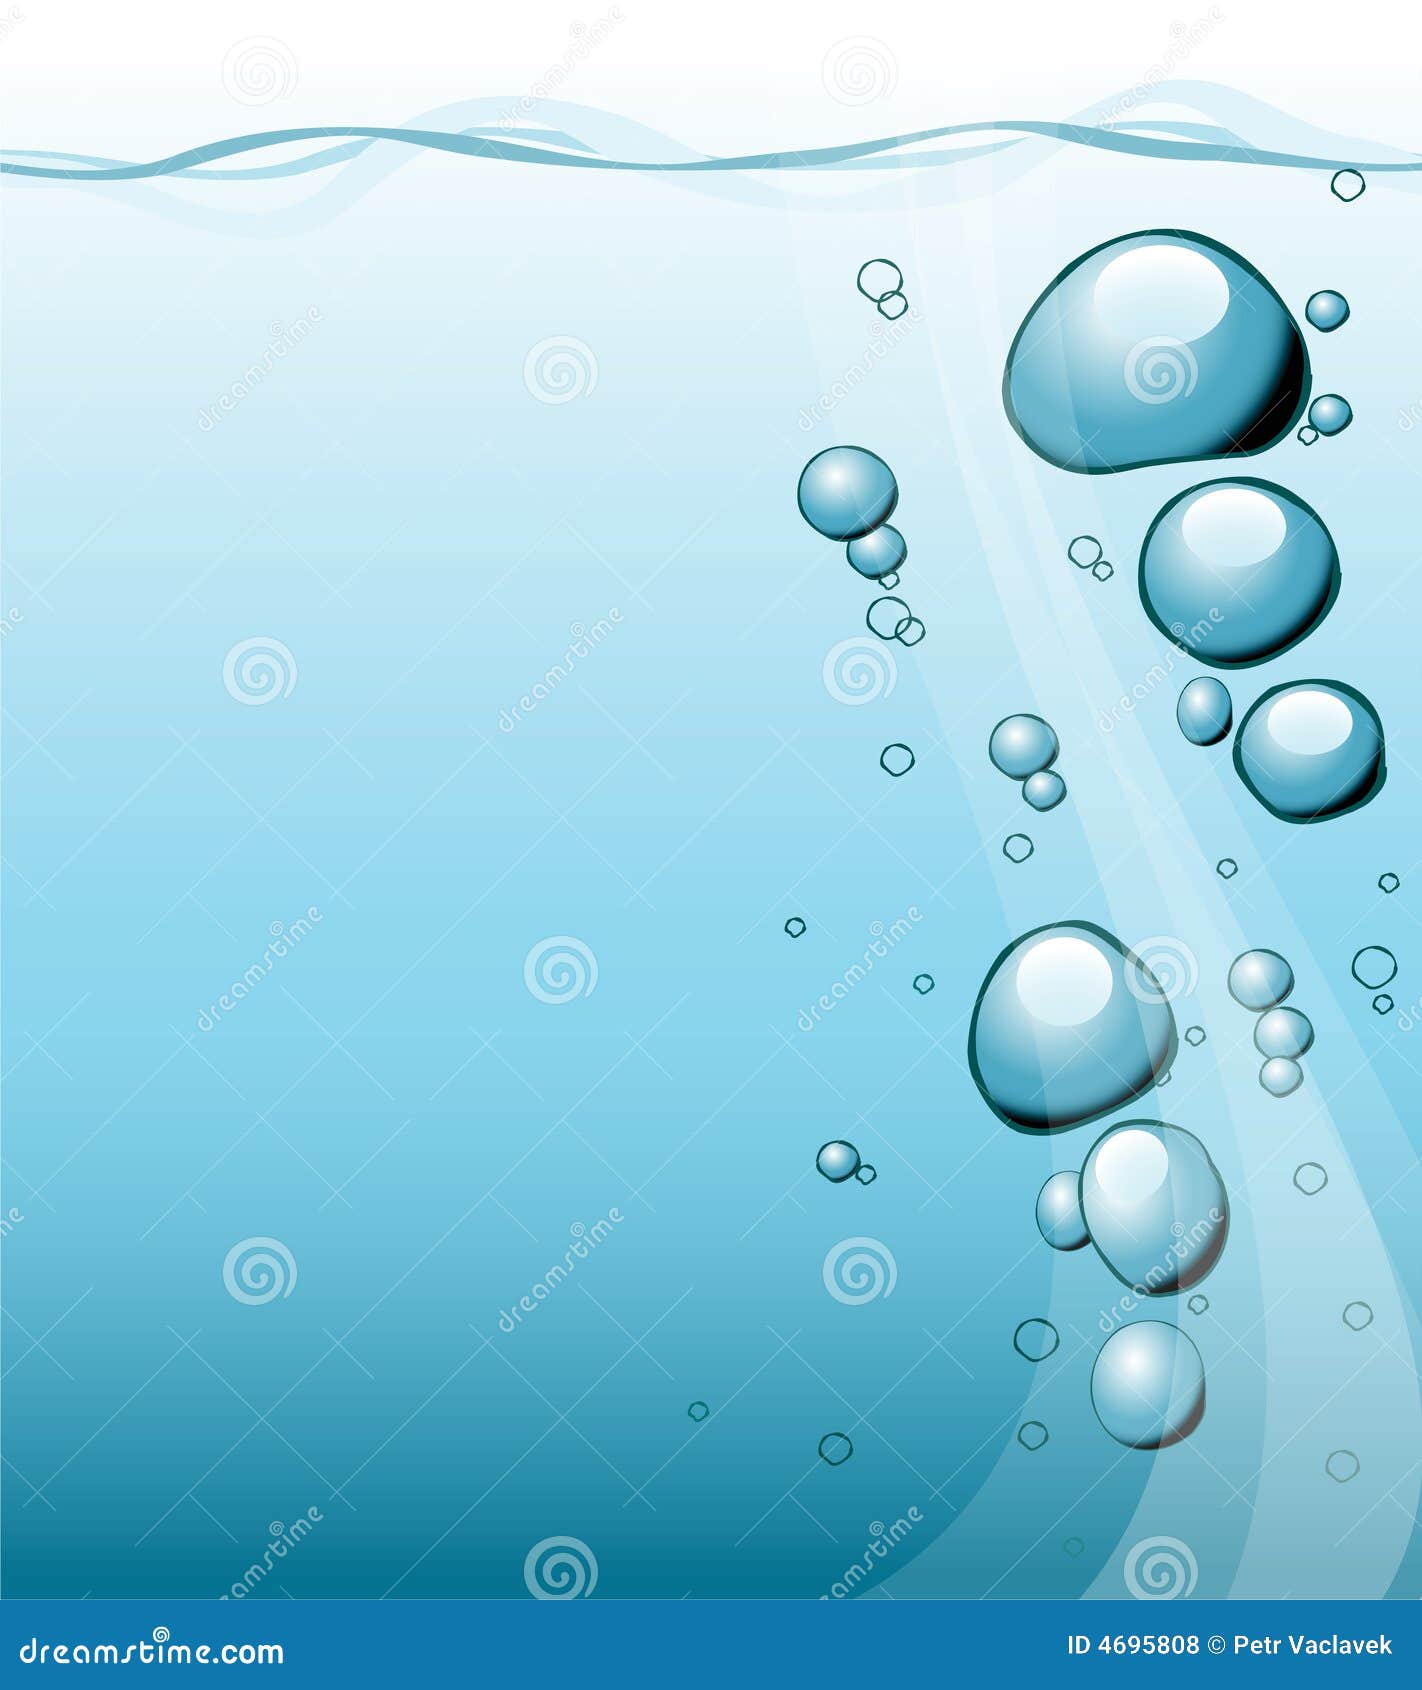 underwater bubbles clipart - photo #11